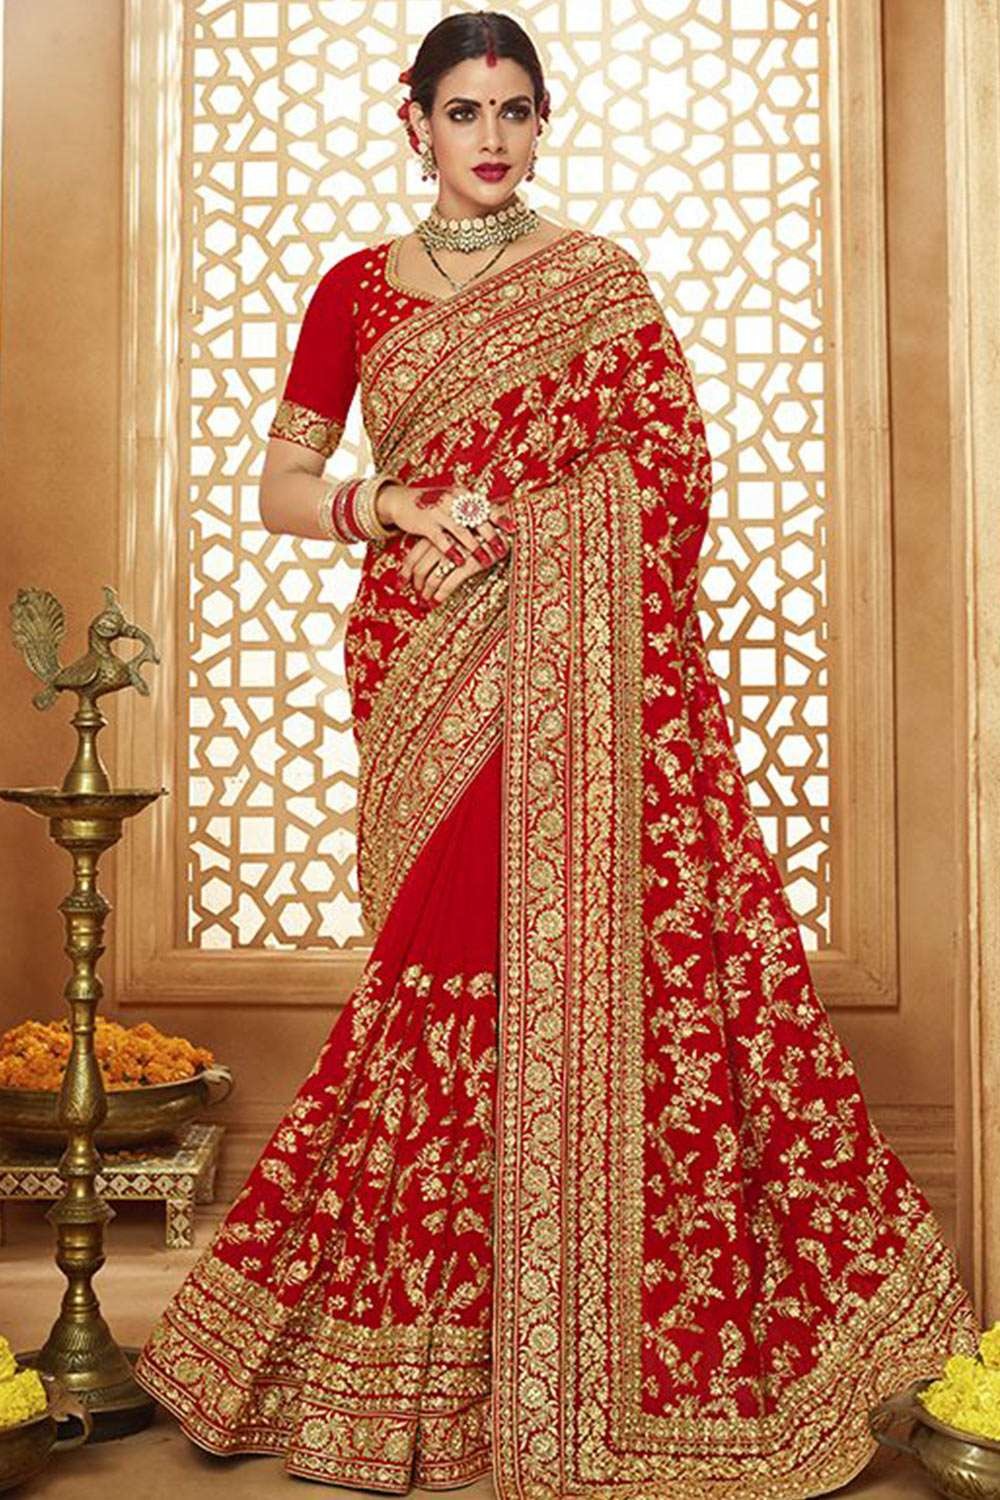 Latest Designer Wedding Red Sarees For Bride|Heavy Embroidered Saree